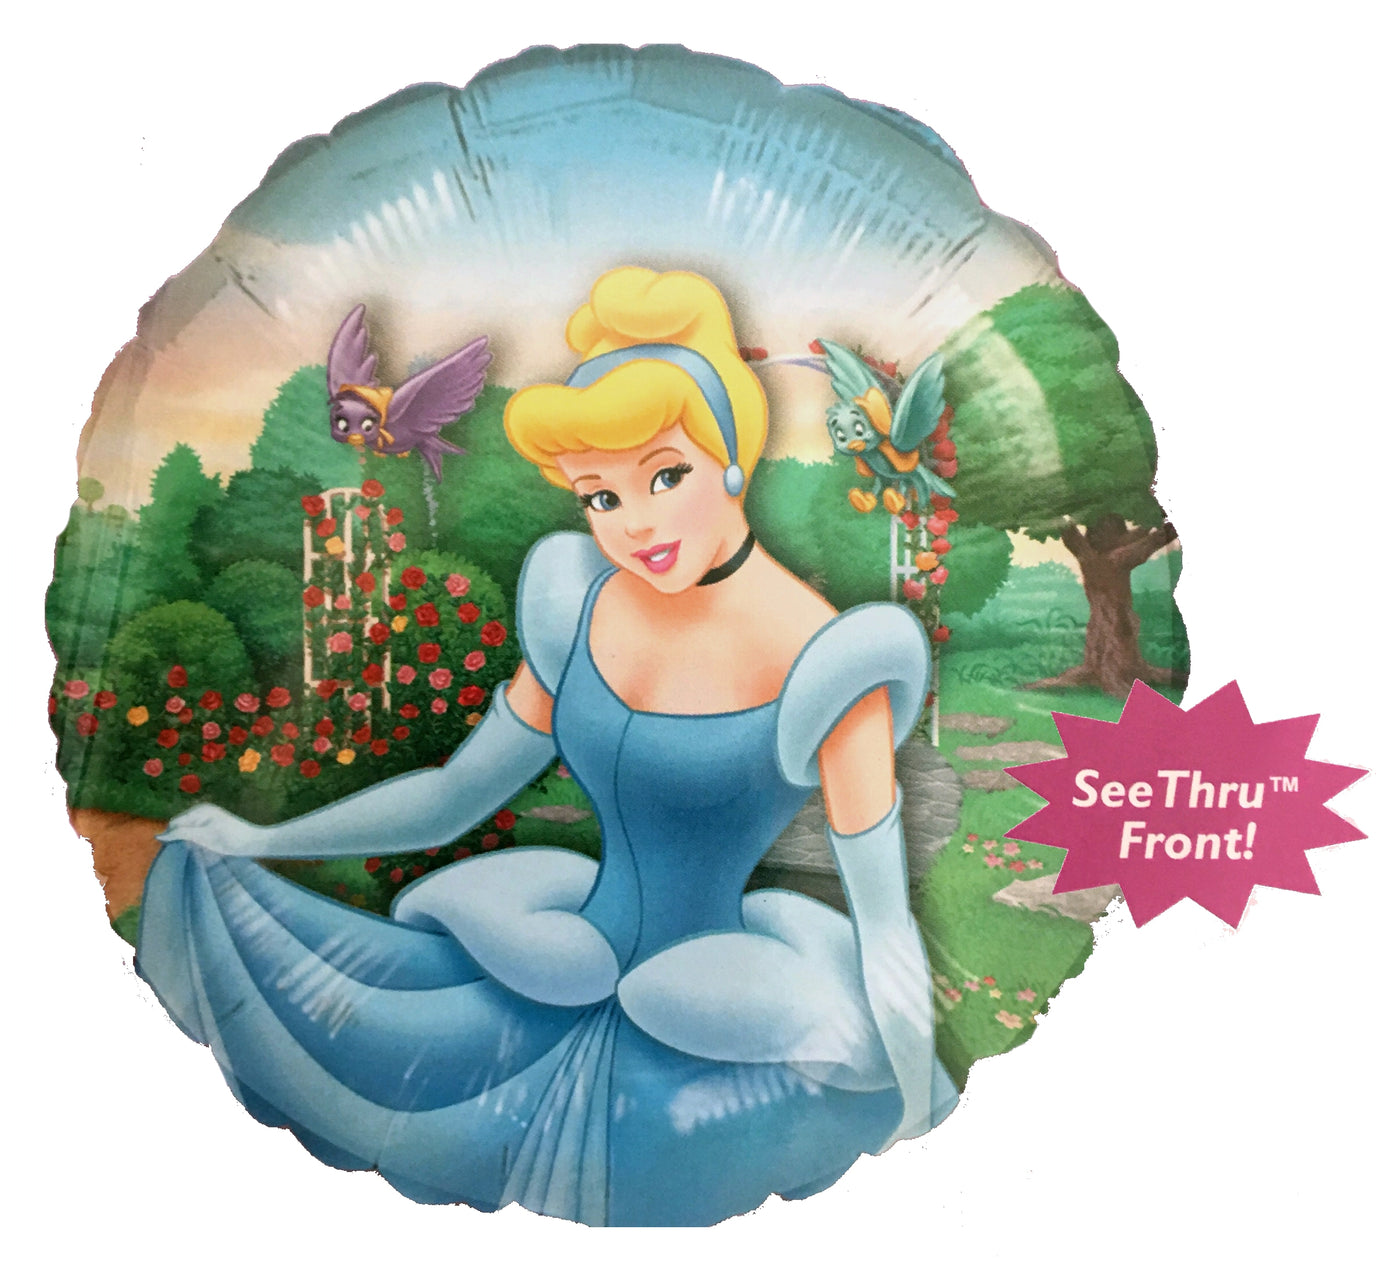 Disney PRINCESSES w/names wall stickers 26 decals Ariel Cinderella Snow  White +